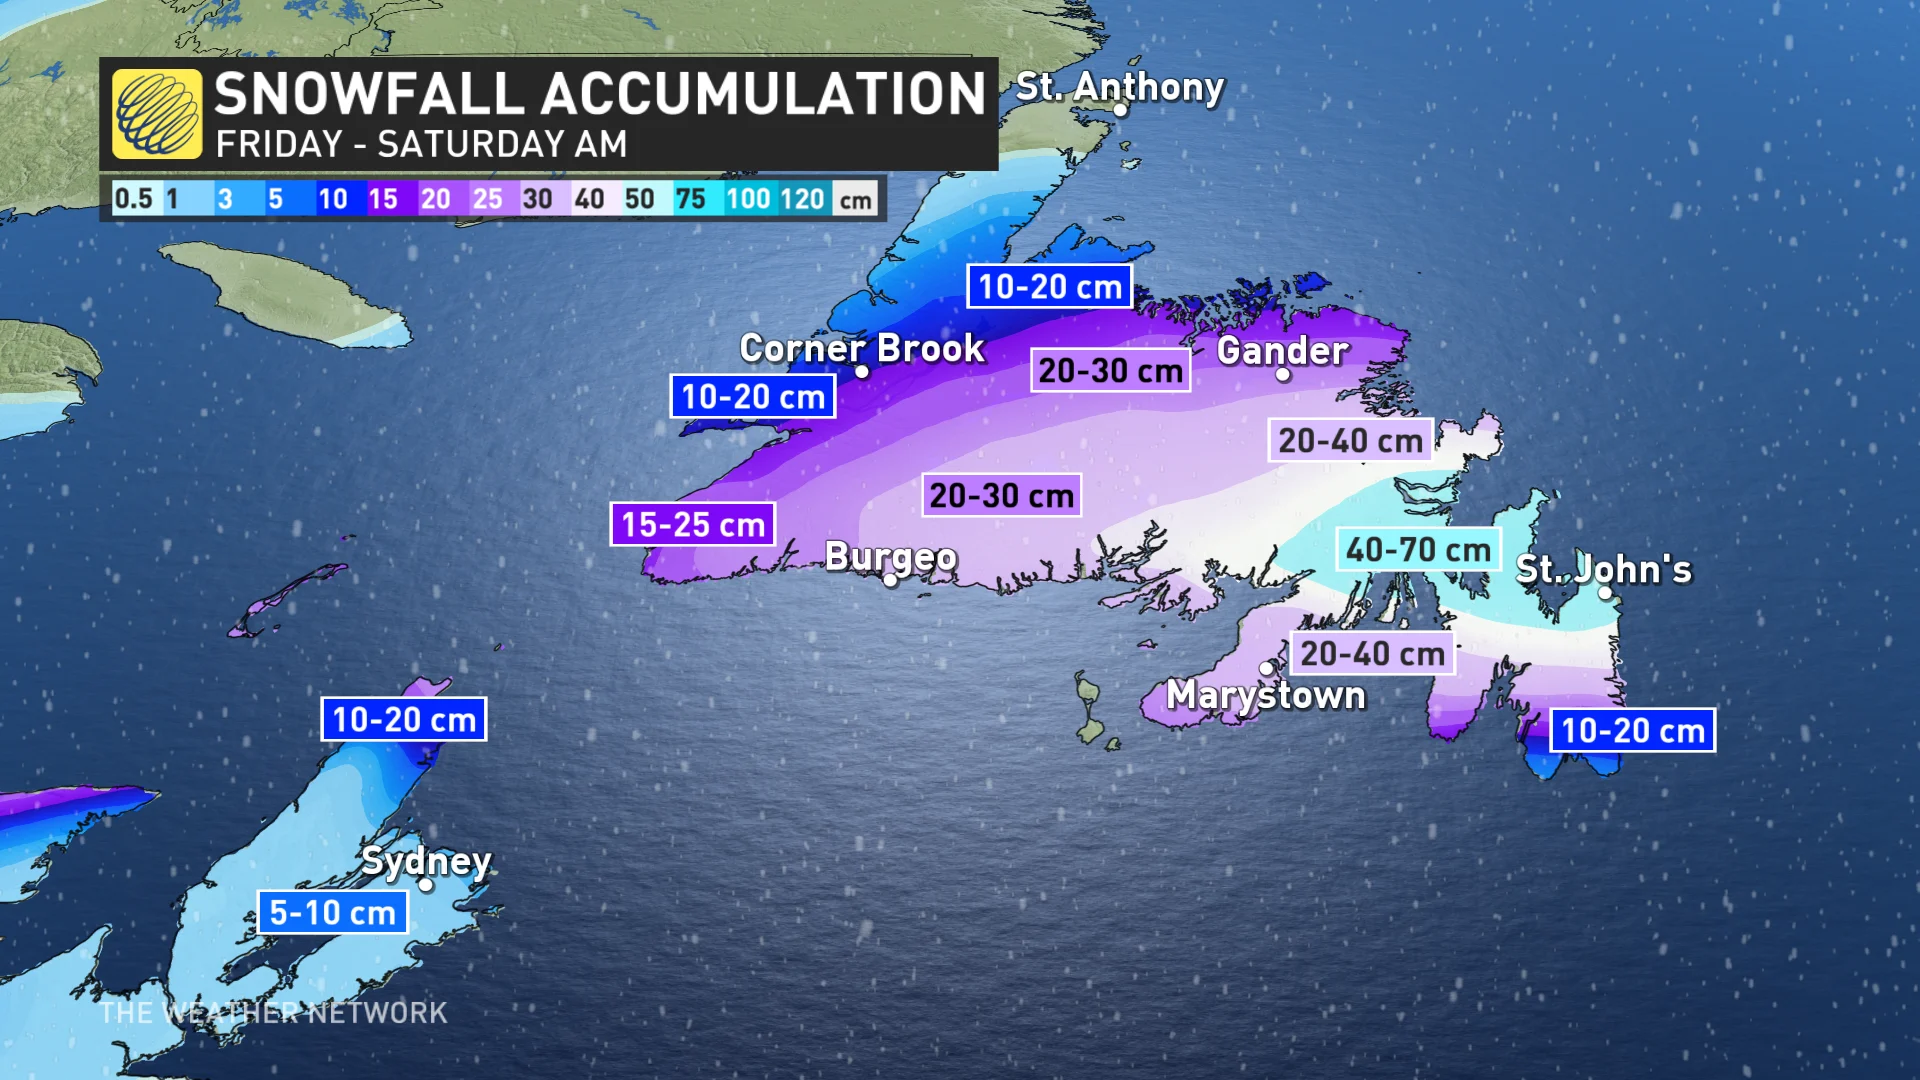 Newfoundland snowfall totals